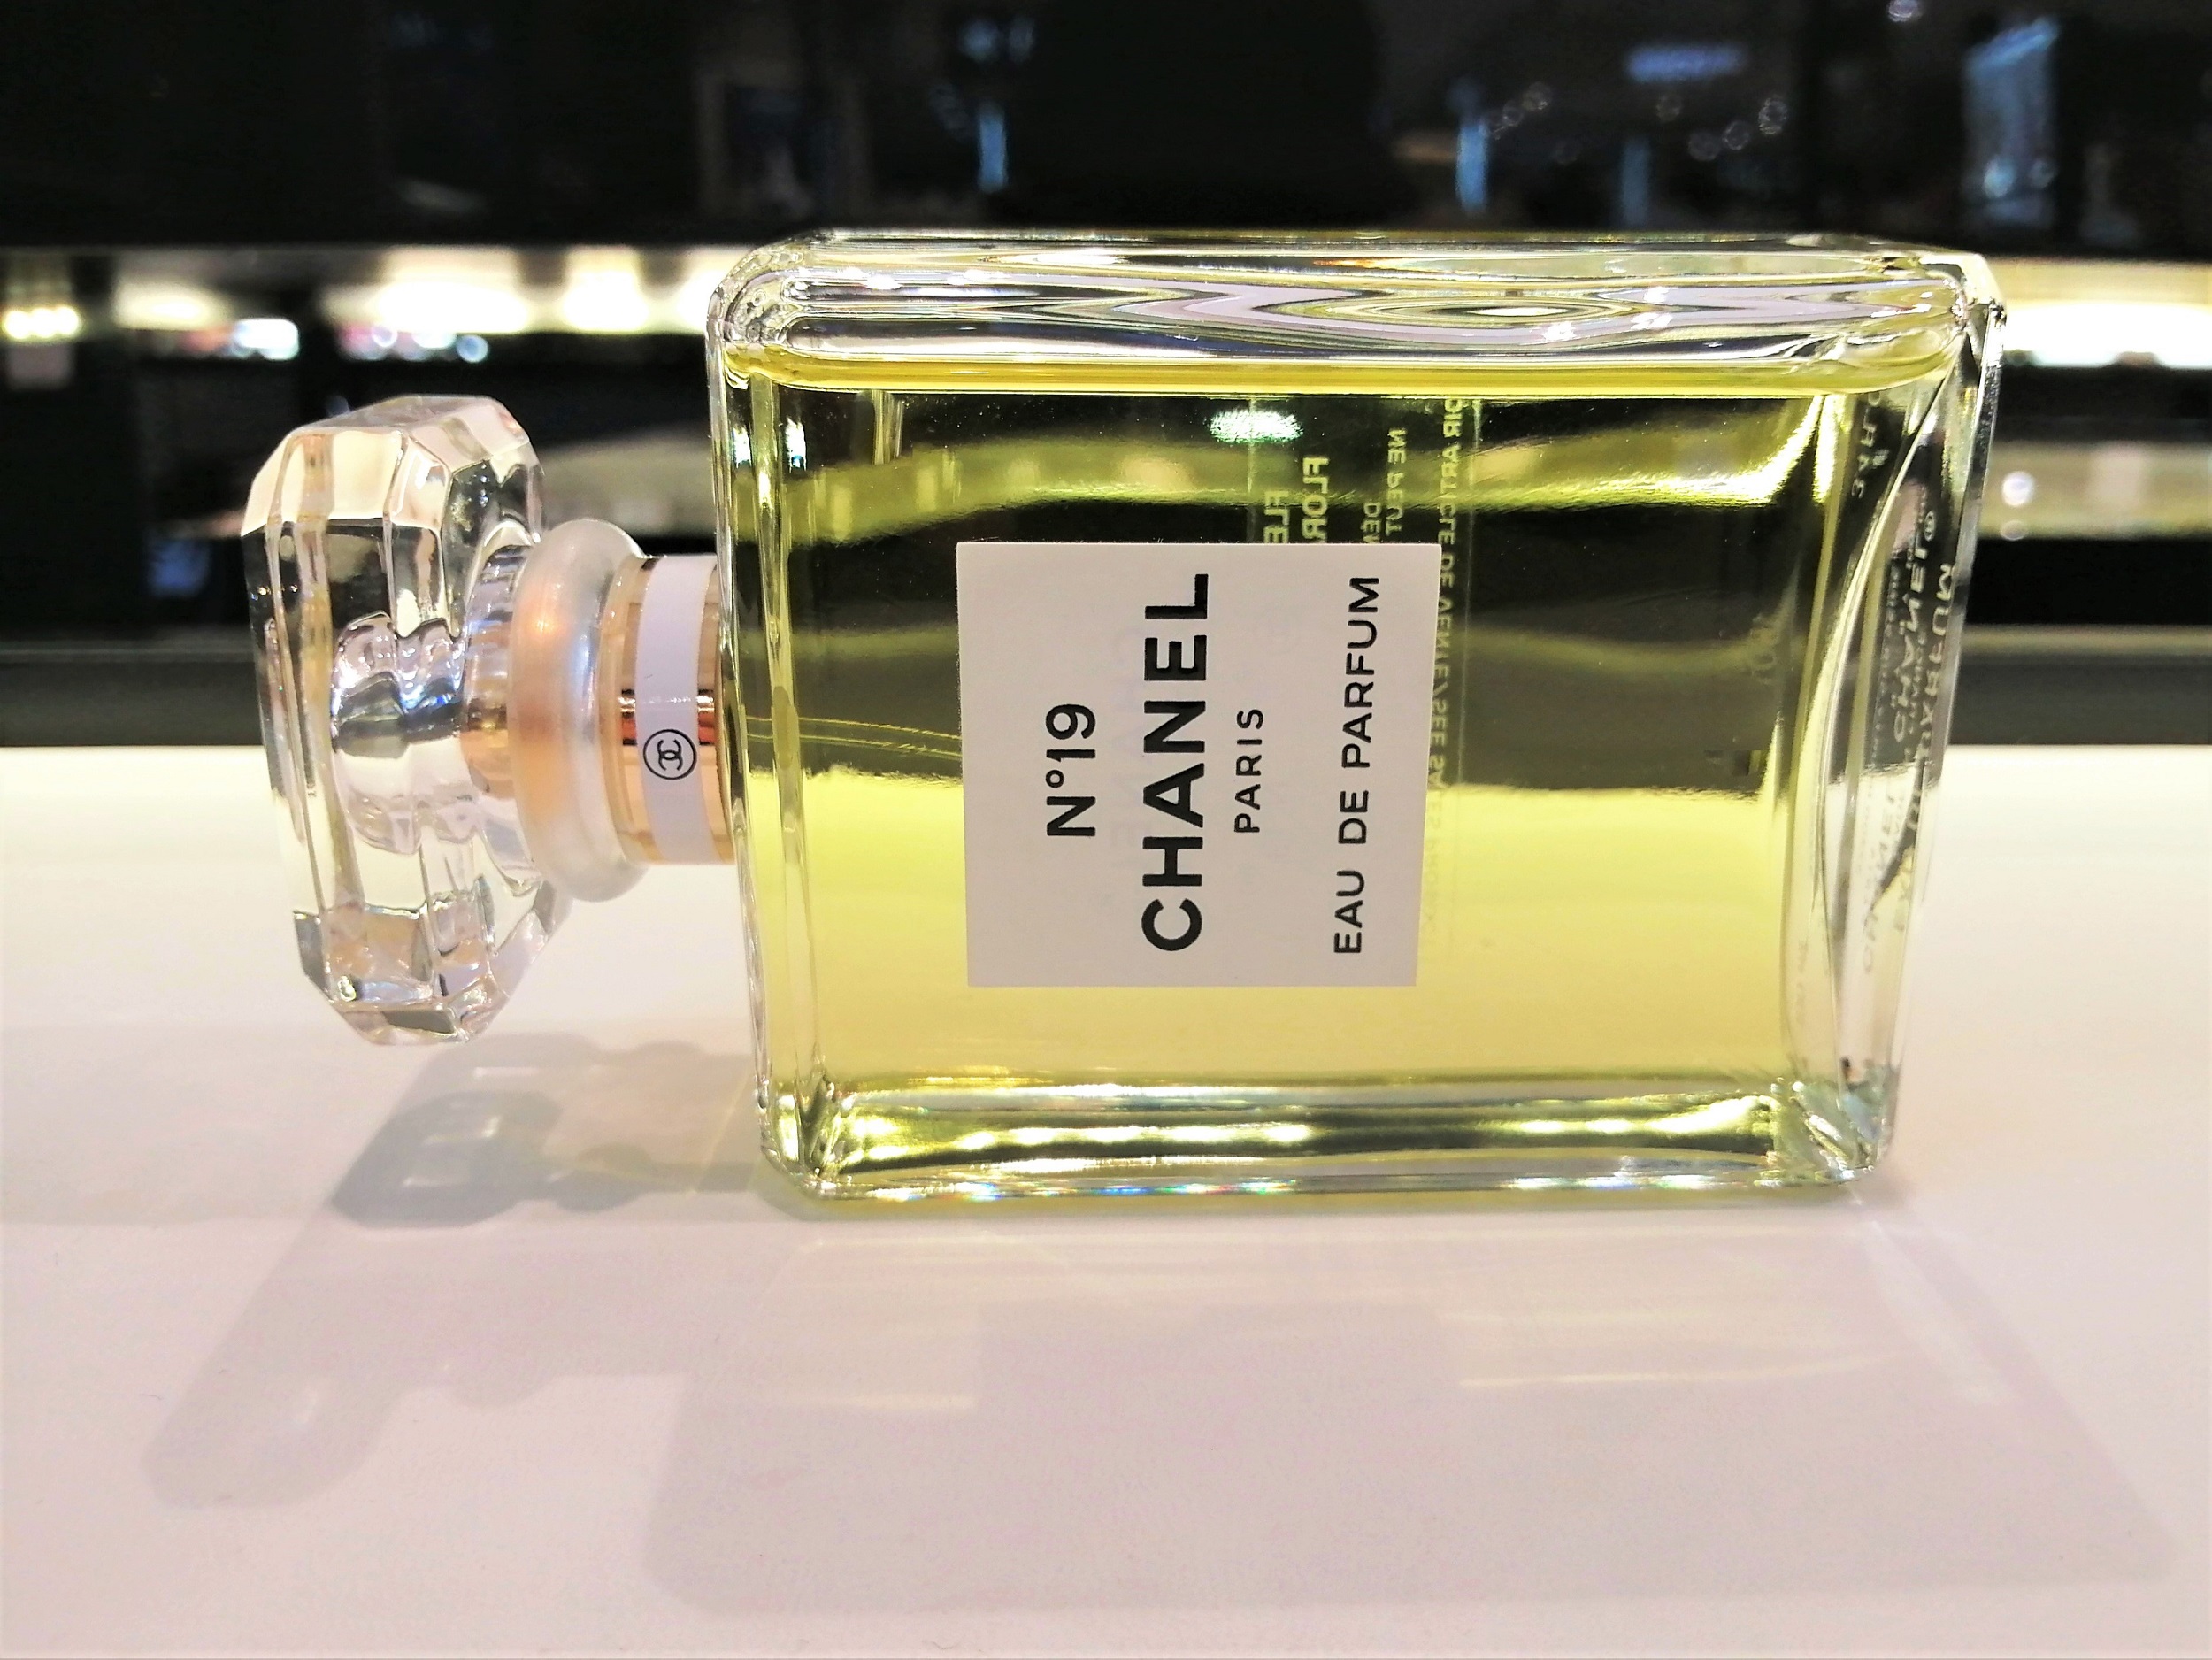 Chanel Perfume Bottles: Chanel No. 19 c1970